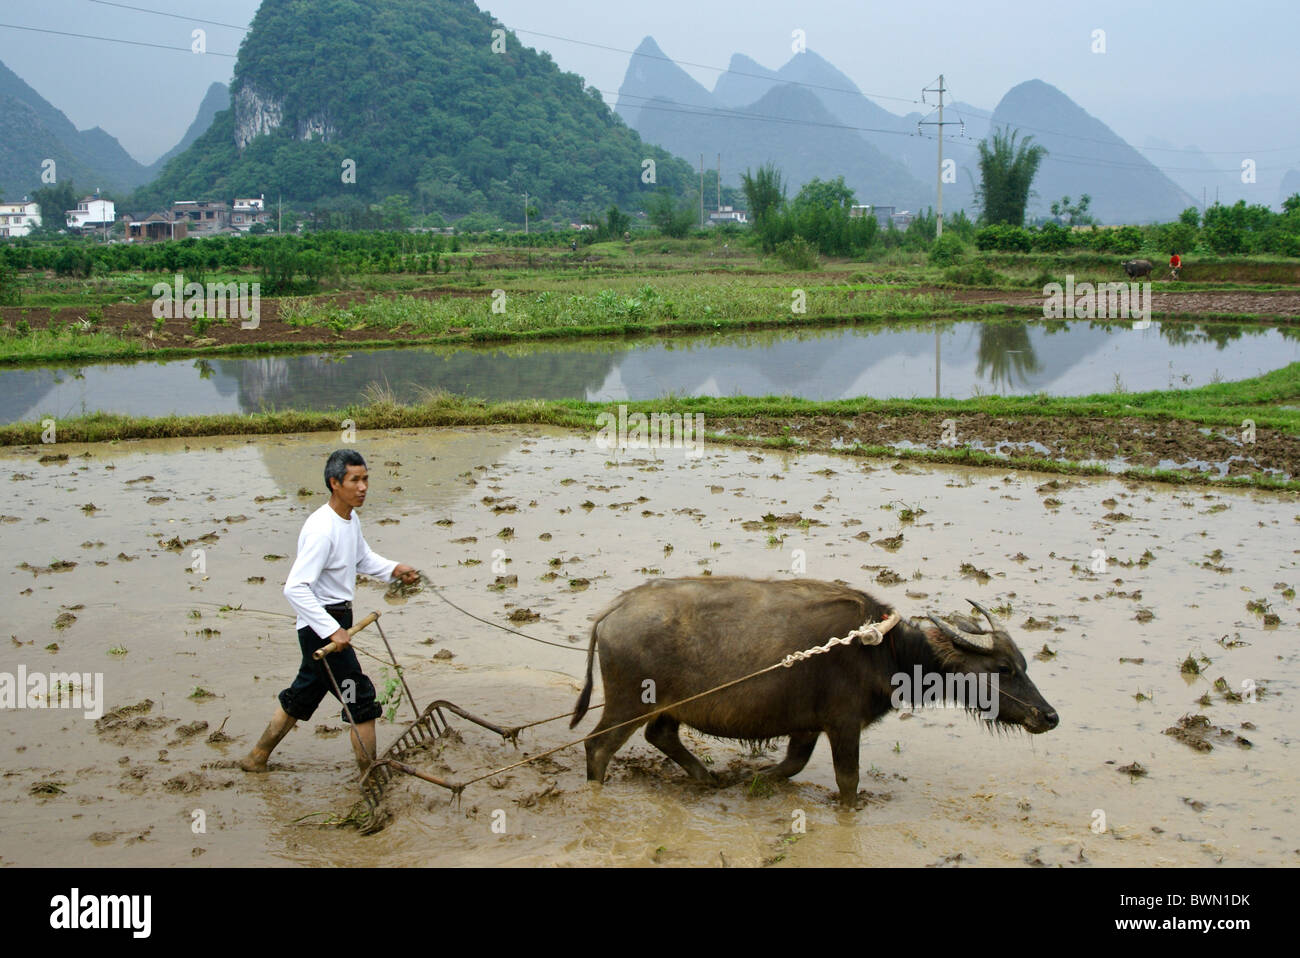 Farmer plowing rice paddy with water buffalo, Guangxi, China Stock Photo